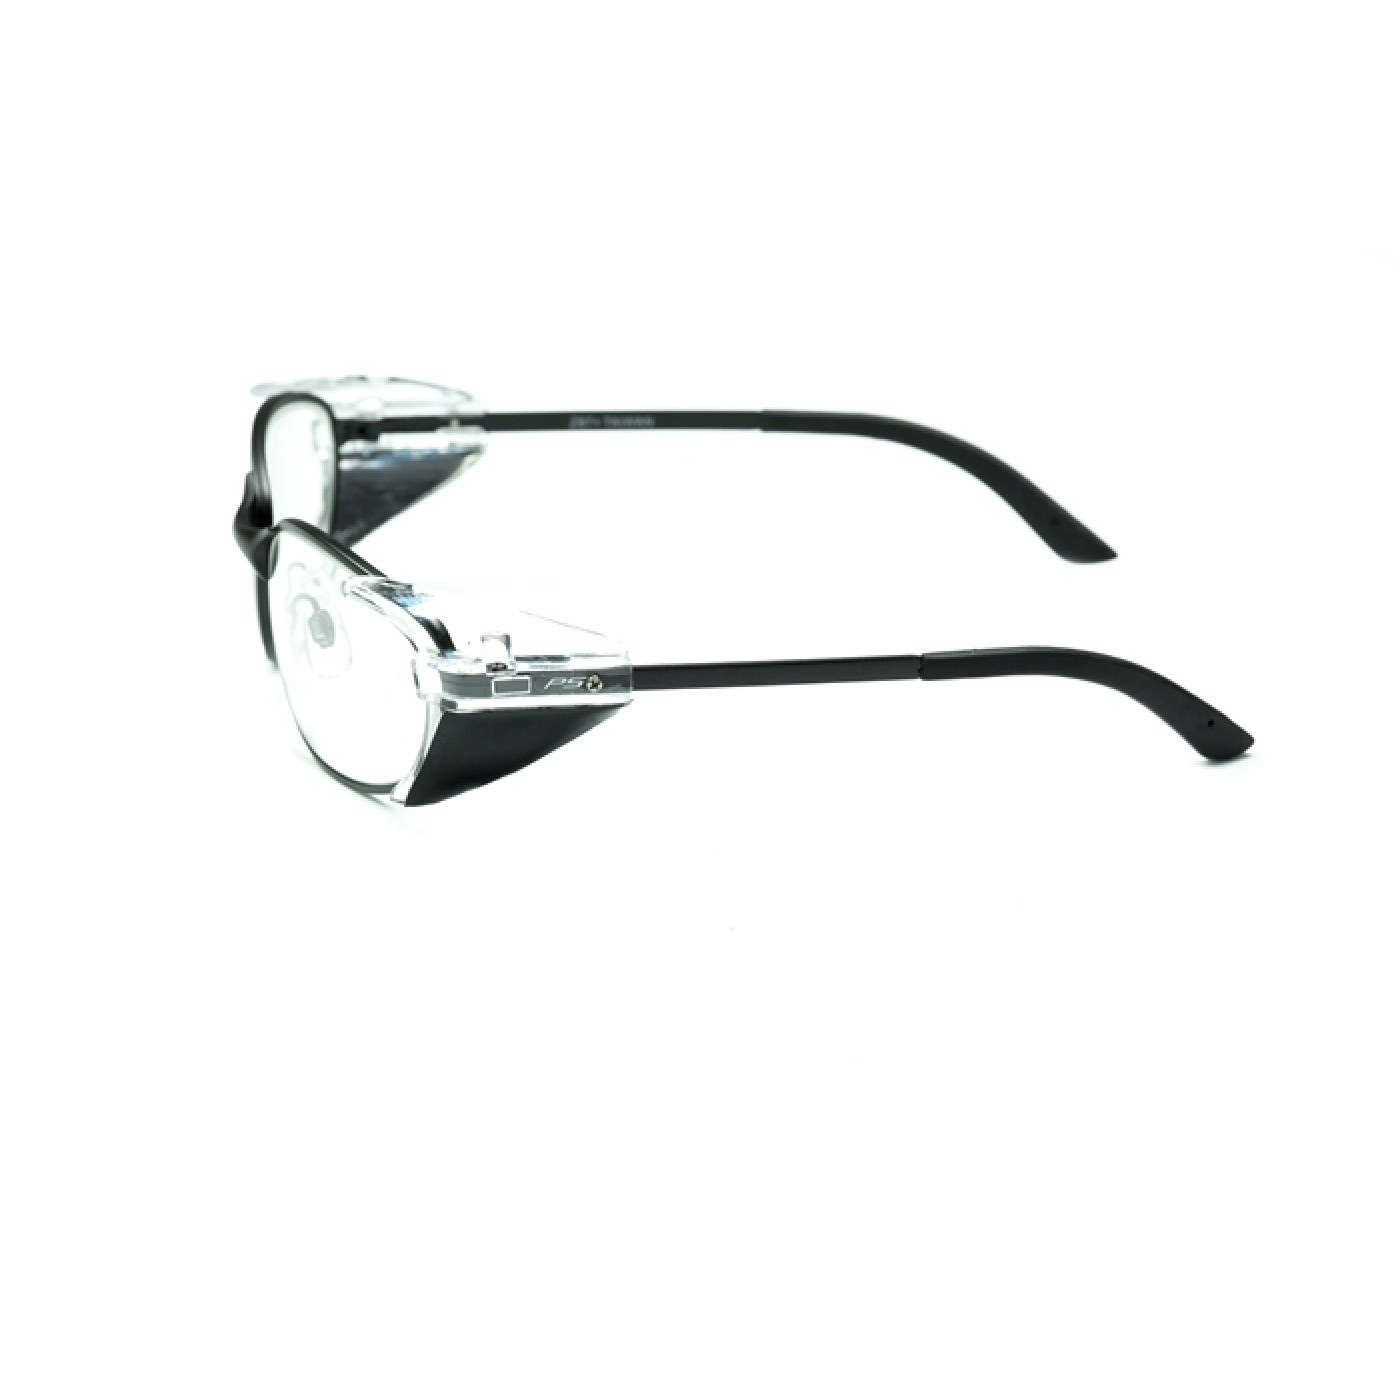 more views metal radiation glasses with slim side shields